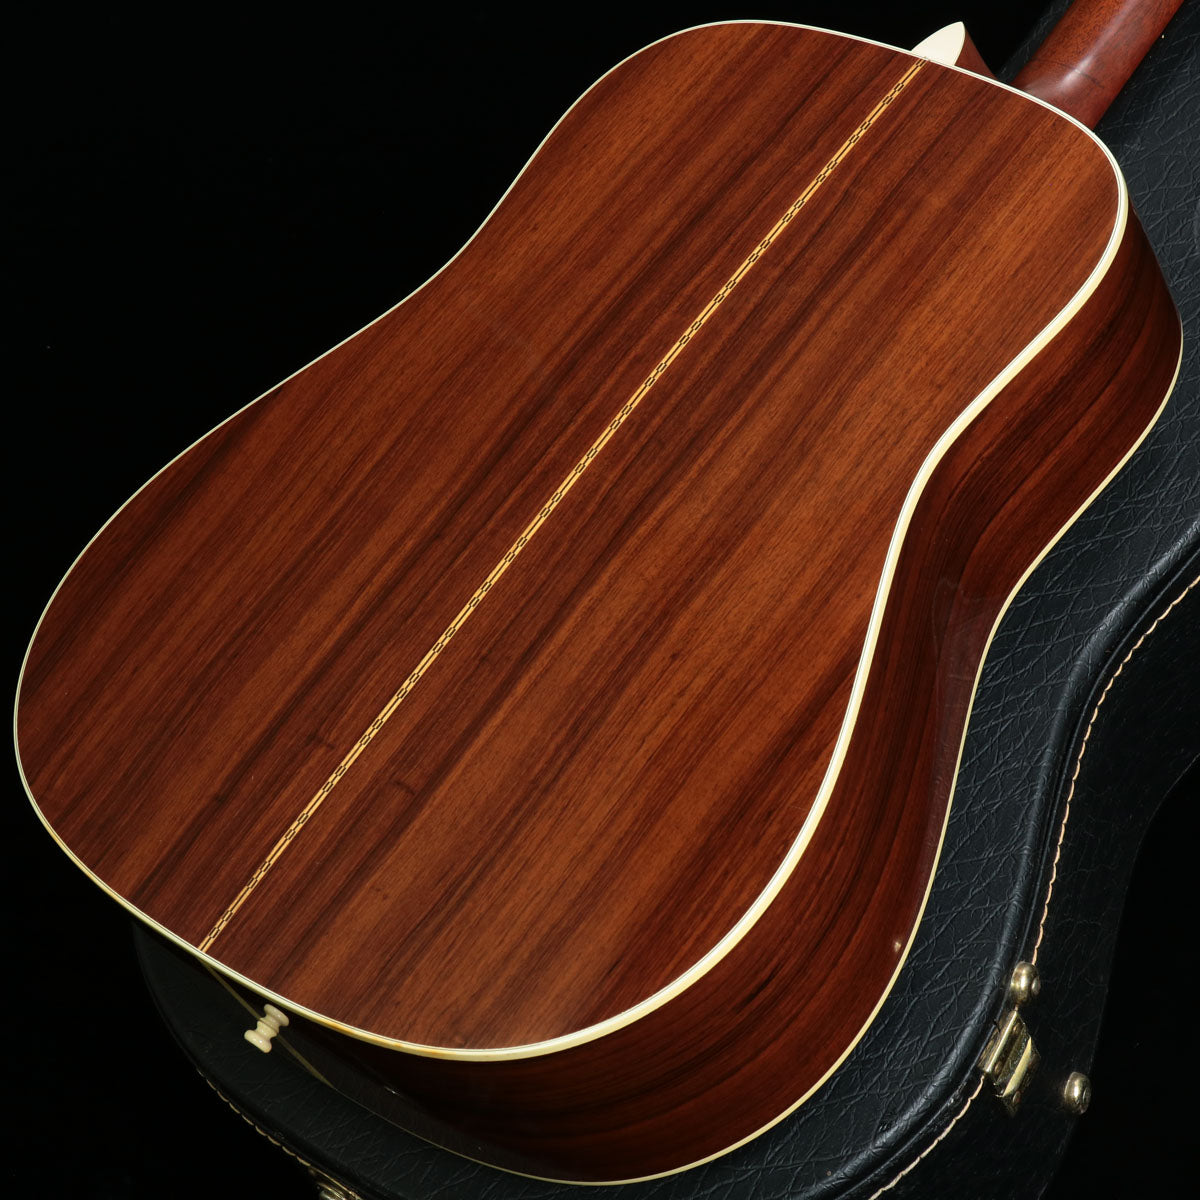 [SN 895164] USED Martin / D-28 AJ [2002] Martin Martin Acoustic Guitar Acoustic Guitar D28 Folk Guitar [08]